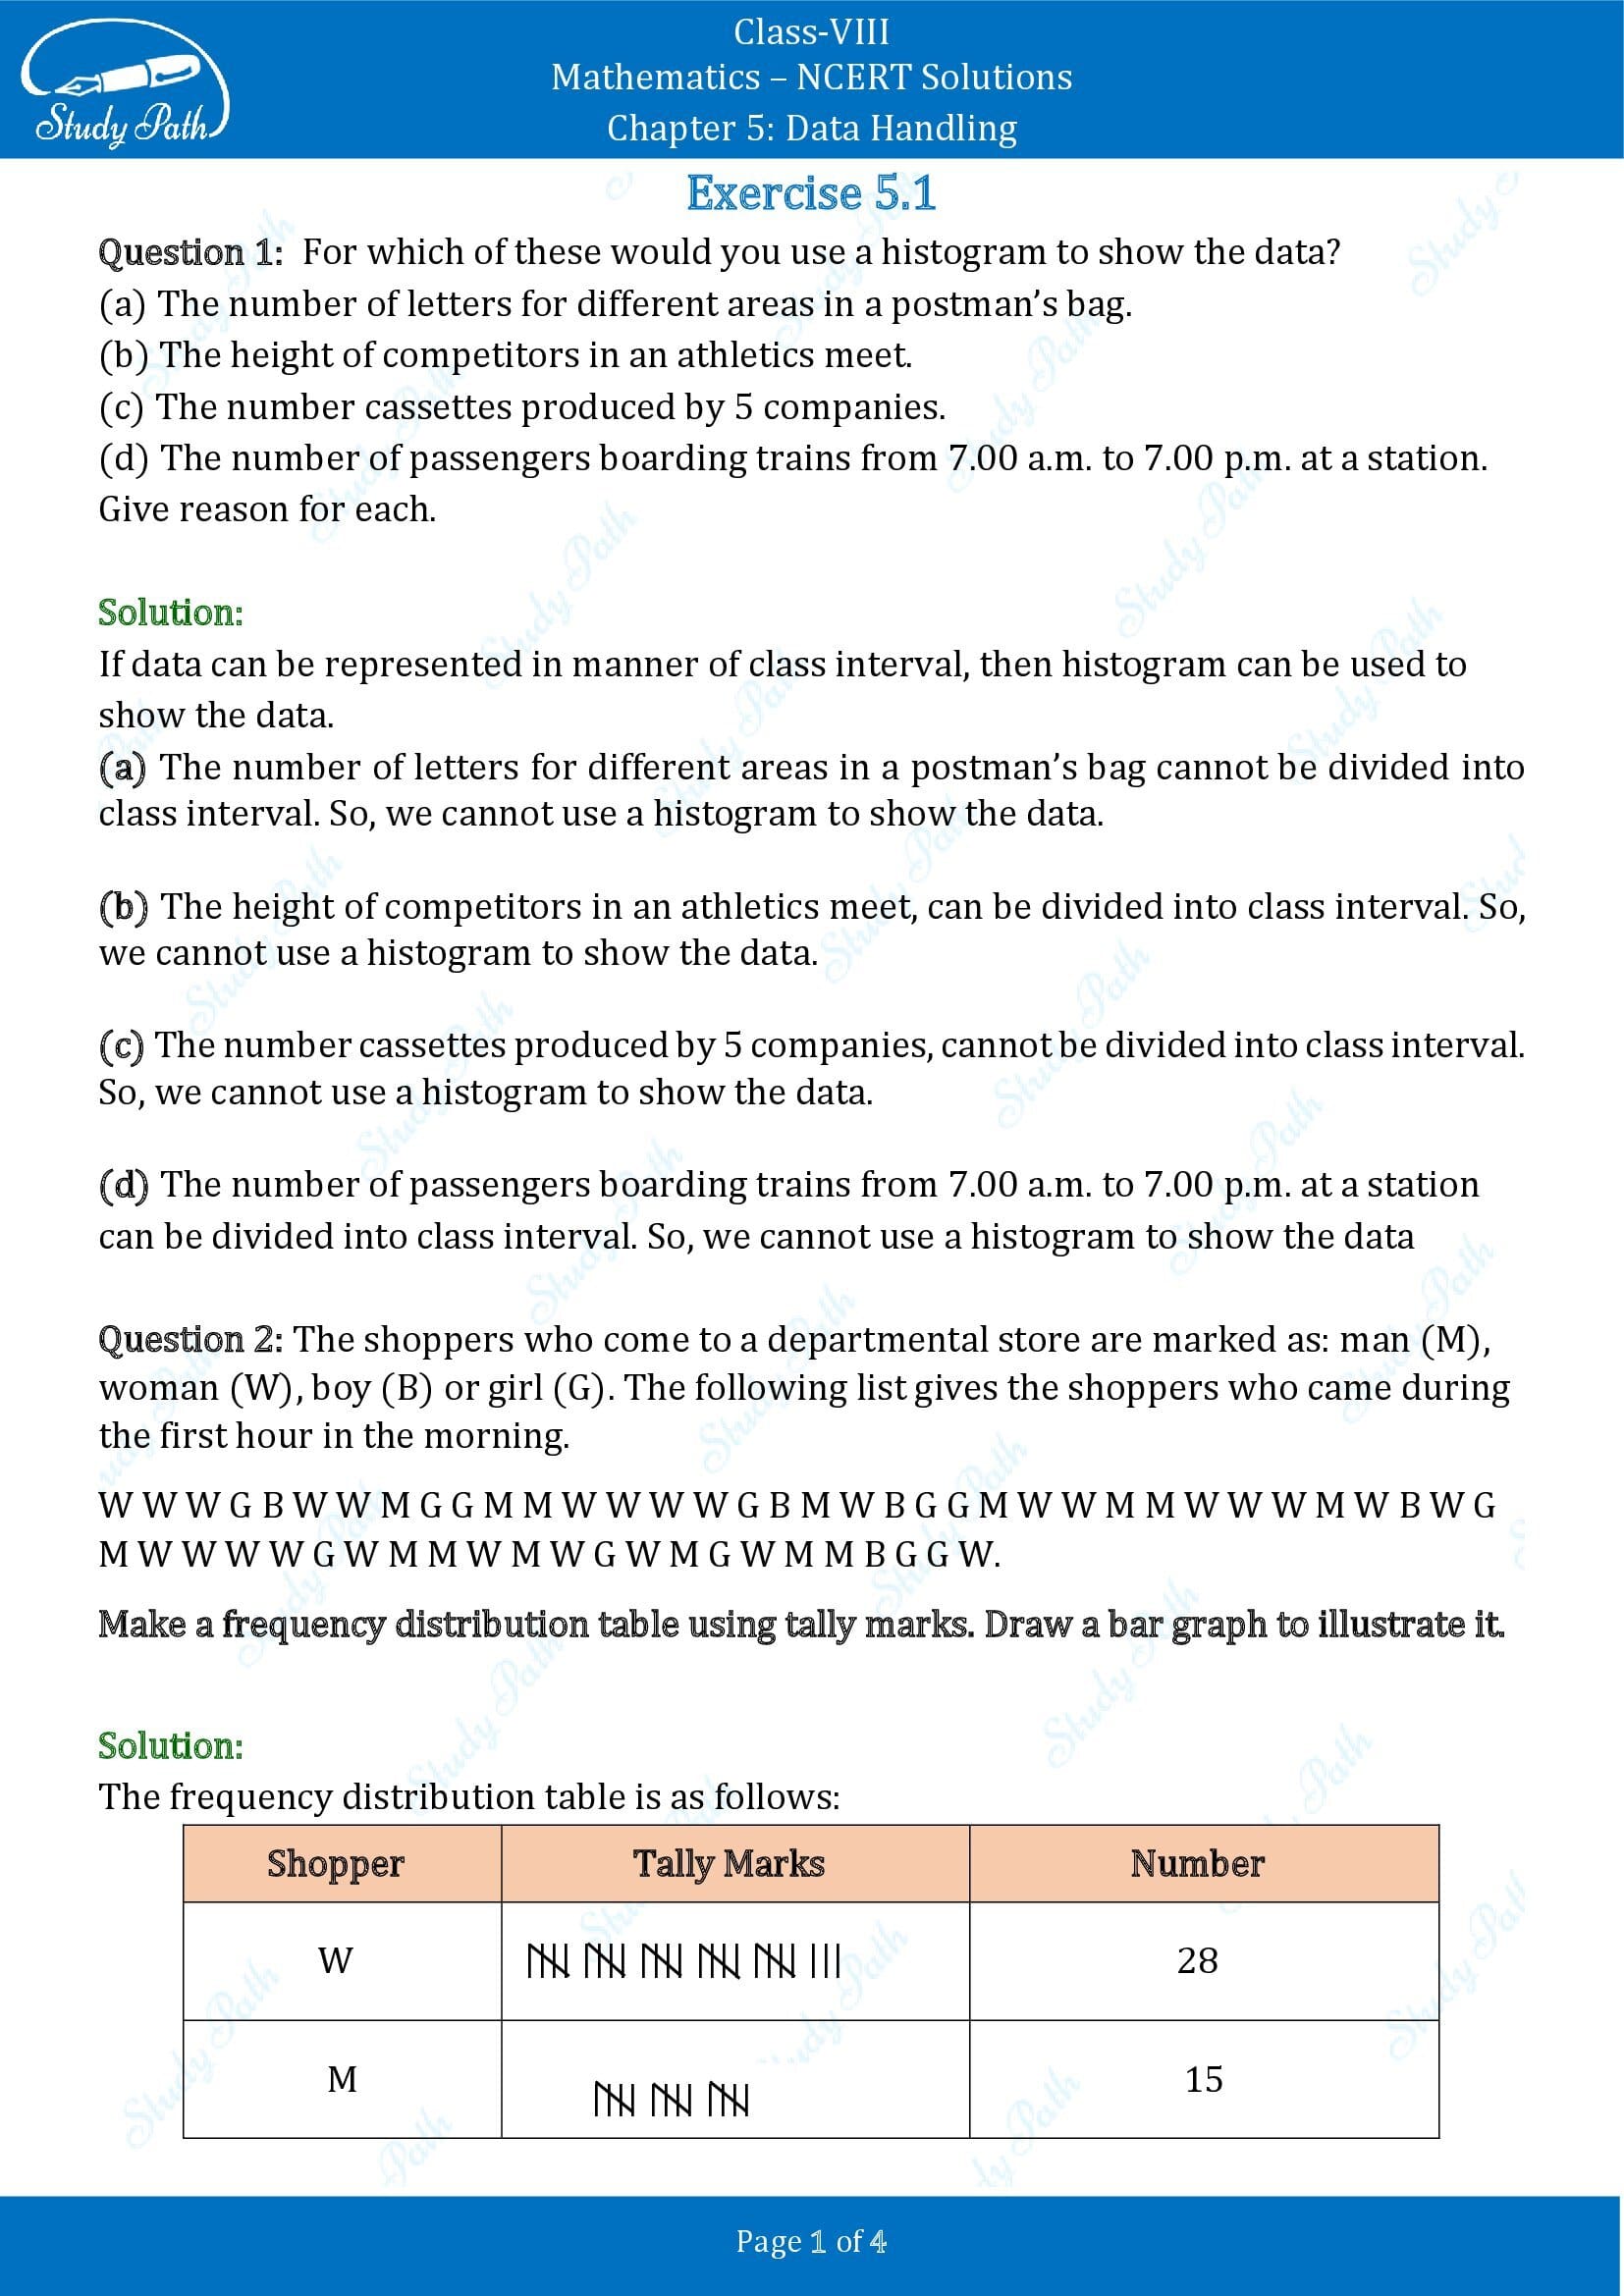 NCERT Solutions for Class 8 Maths Chapter 5 Data Handling Exercise 5.1 00001